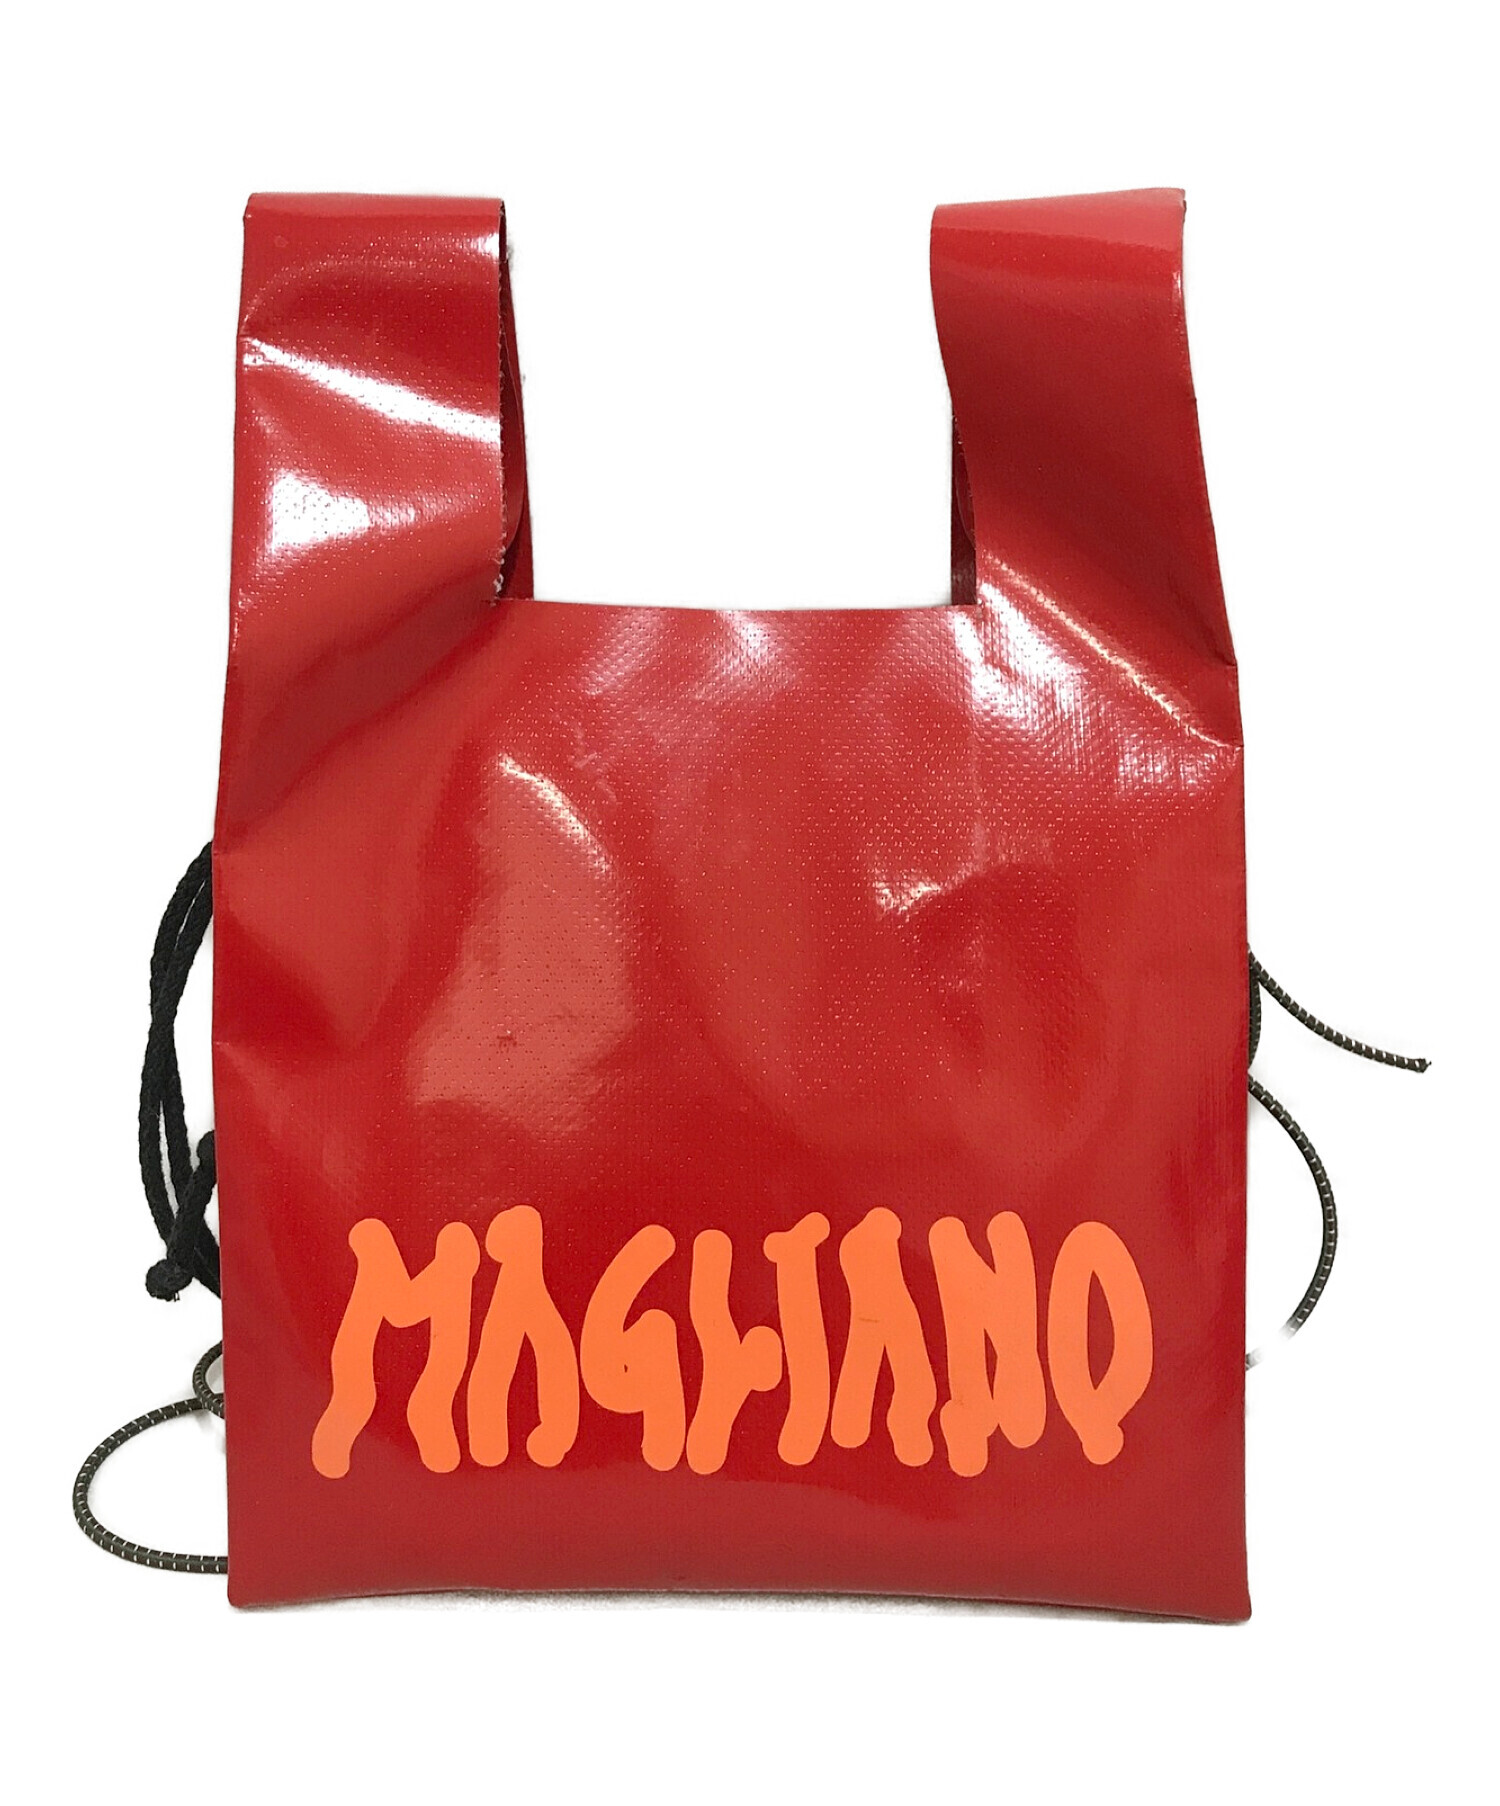 Magliano マリアーノ バッグ | www.hartwellspremium.com